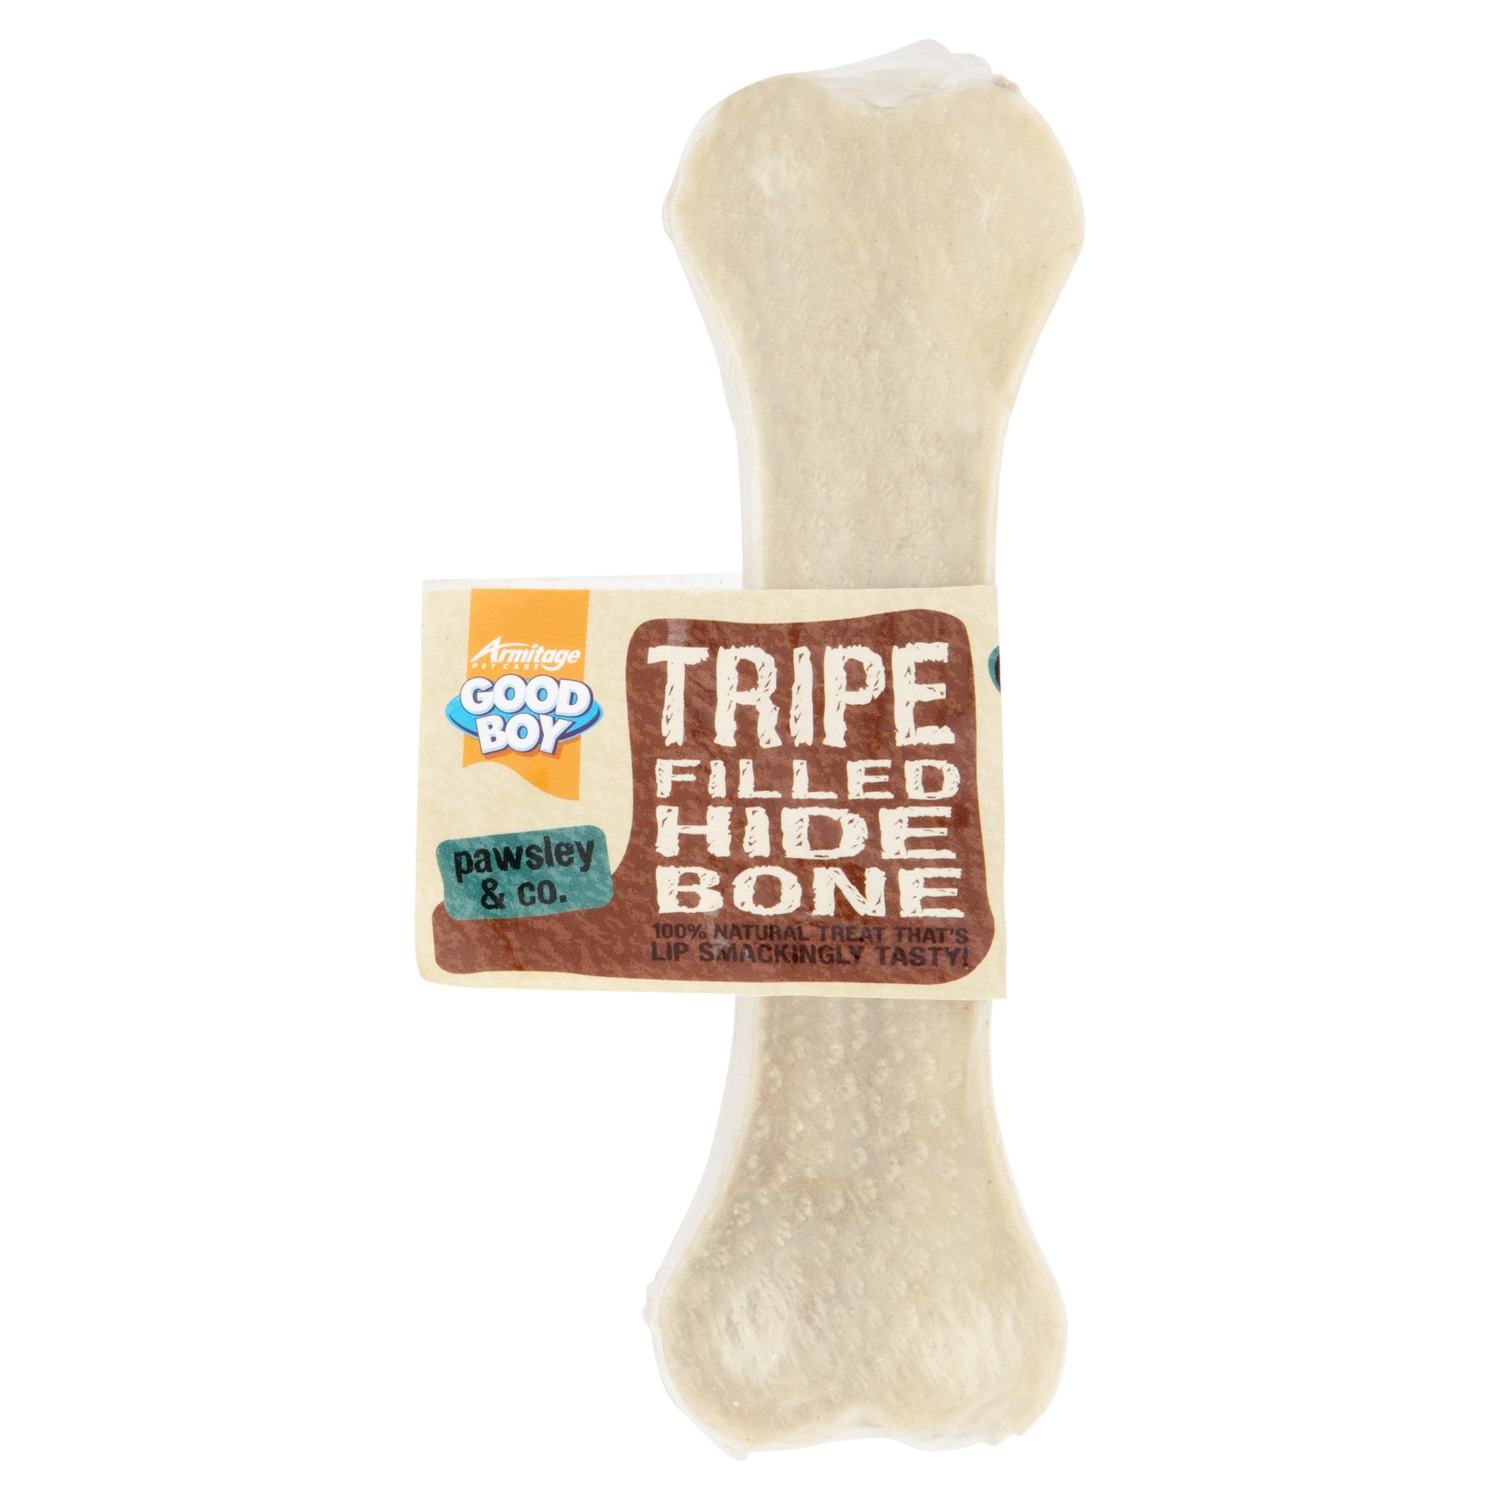 Good Boy Tripe Filled Hide Bone Dog Treat Image